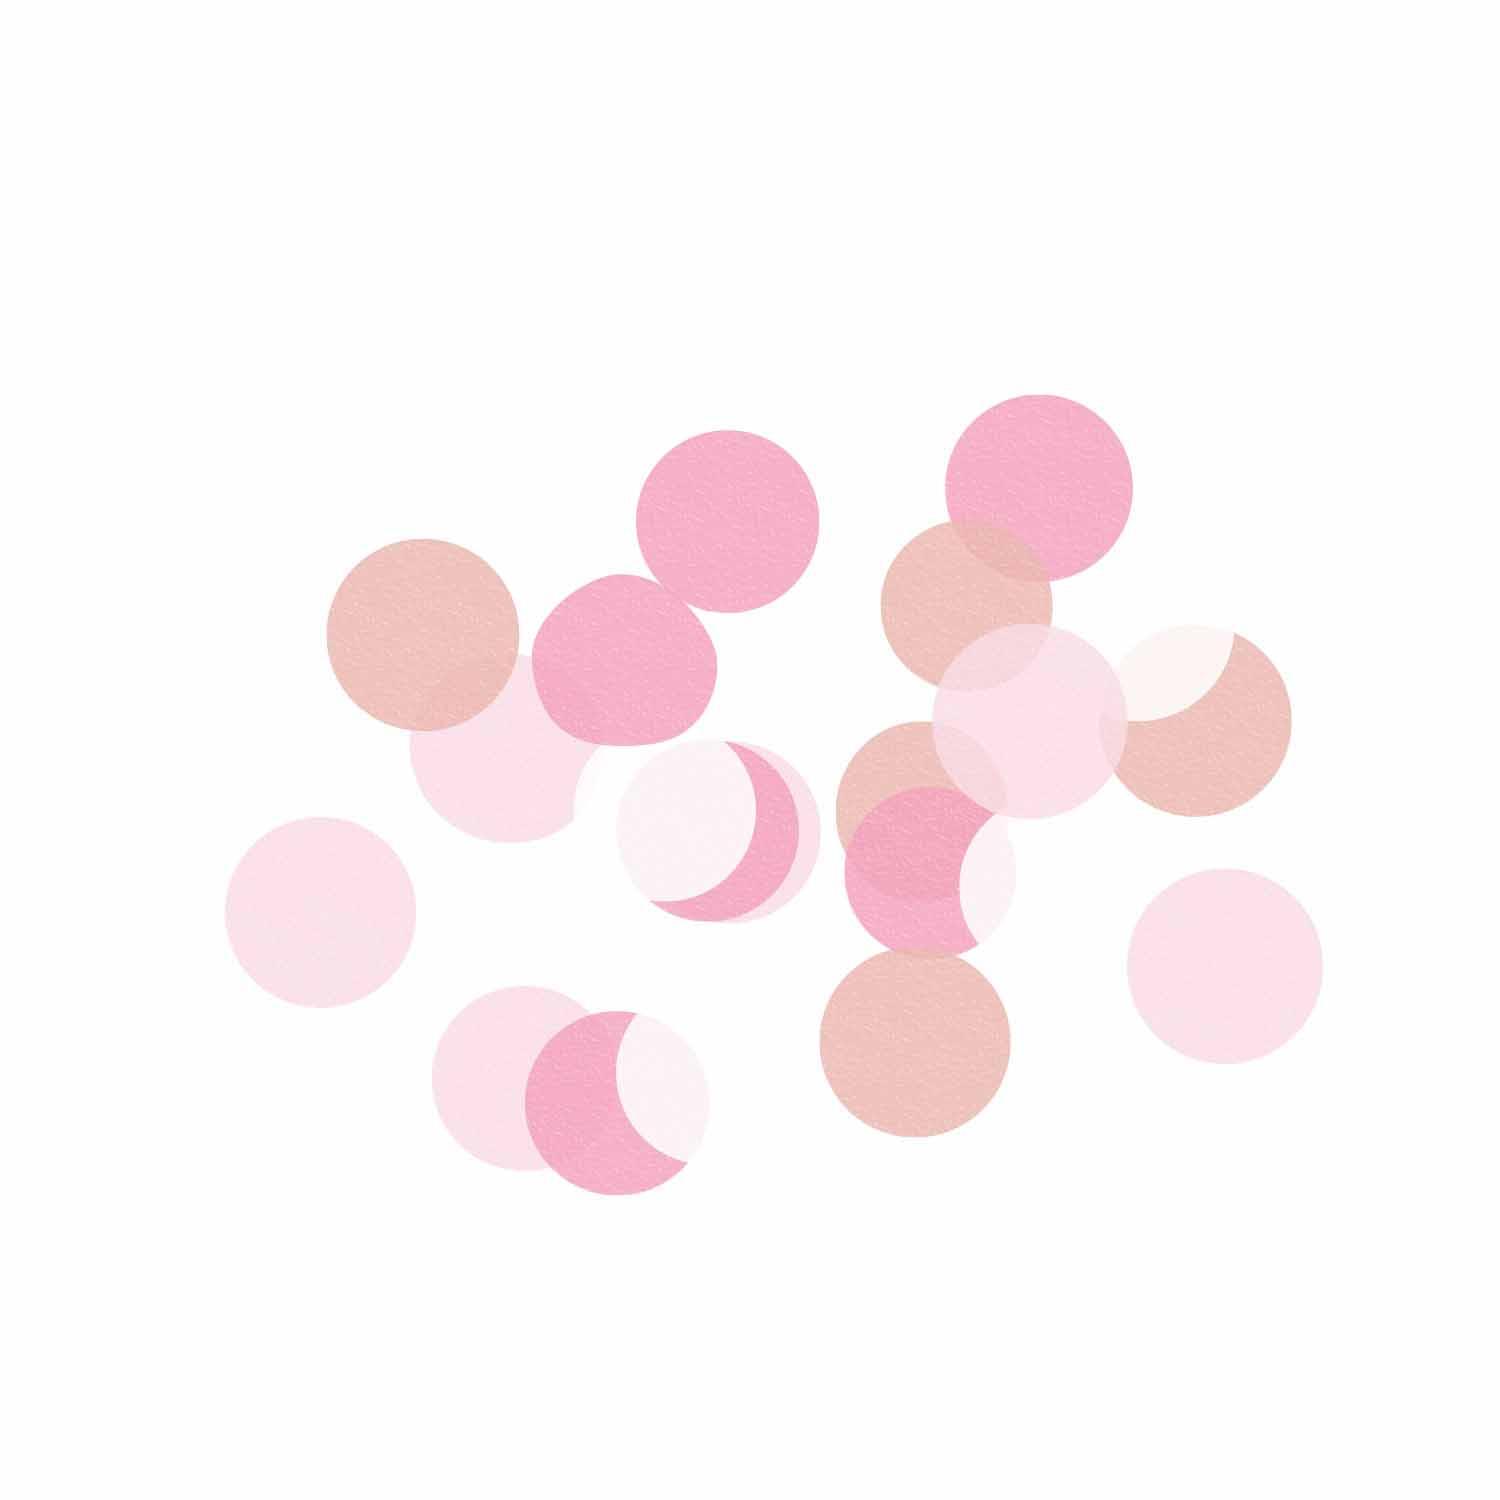 Paper Confetti Mix of Pink & White